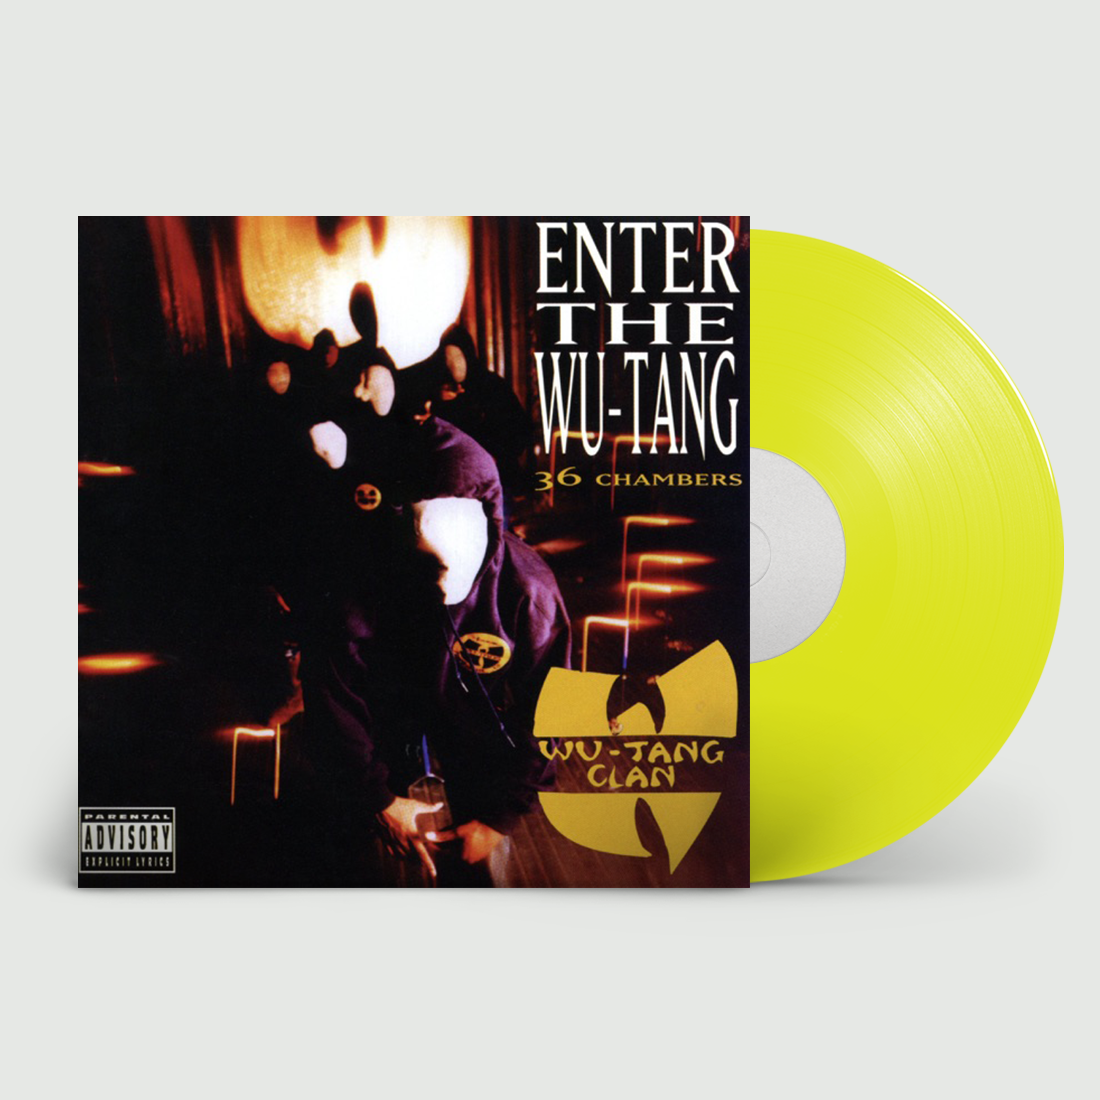 Wu-Tang Clan - Enter The Wu-Tang Clan (36 Chambers): Limited Yellow Vinyl LP